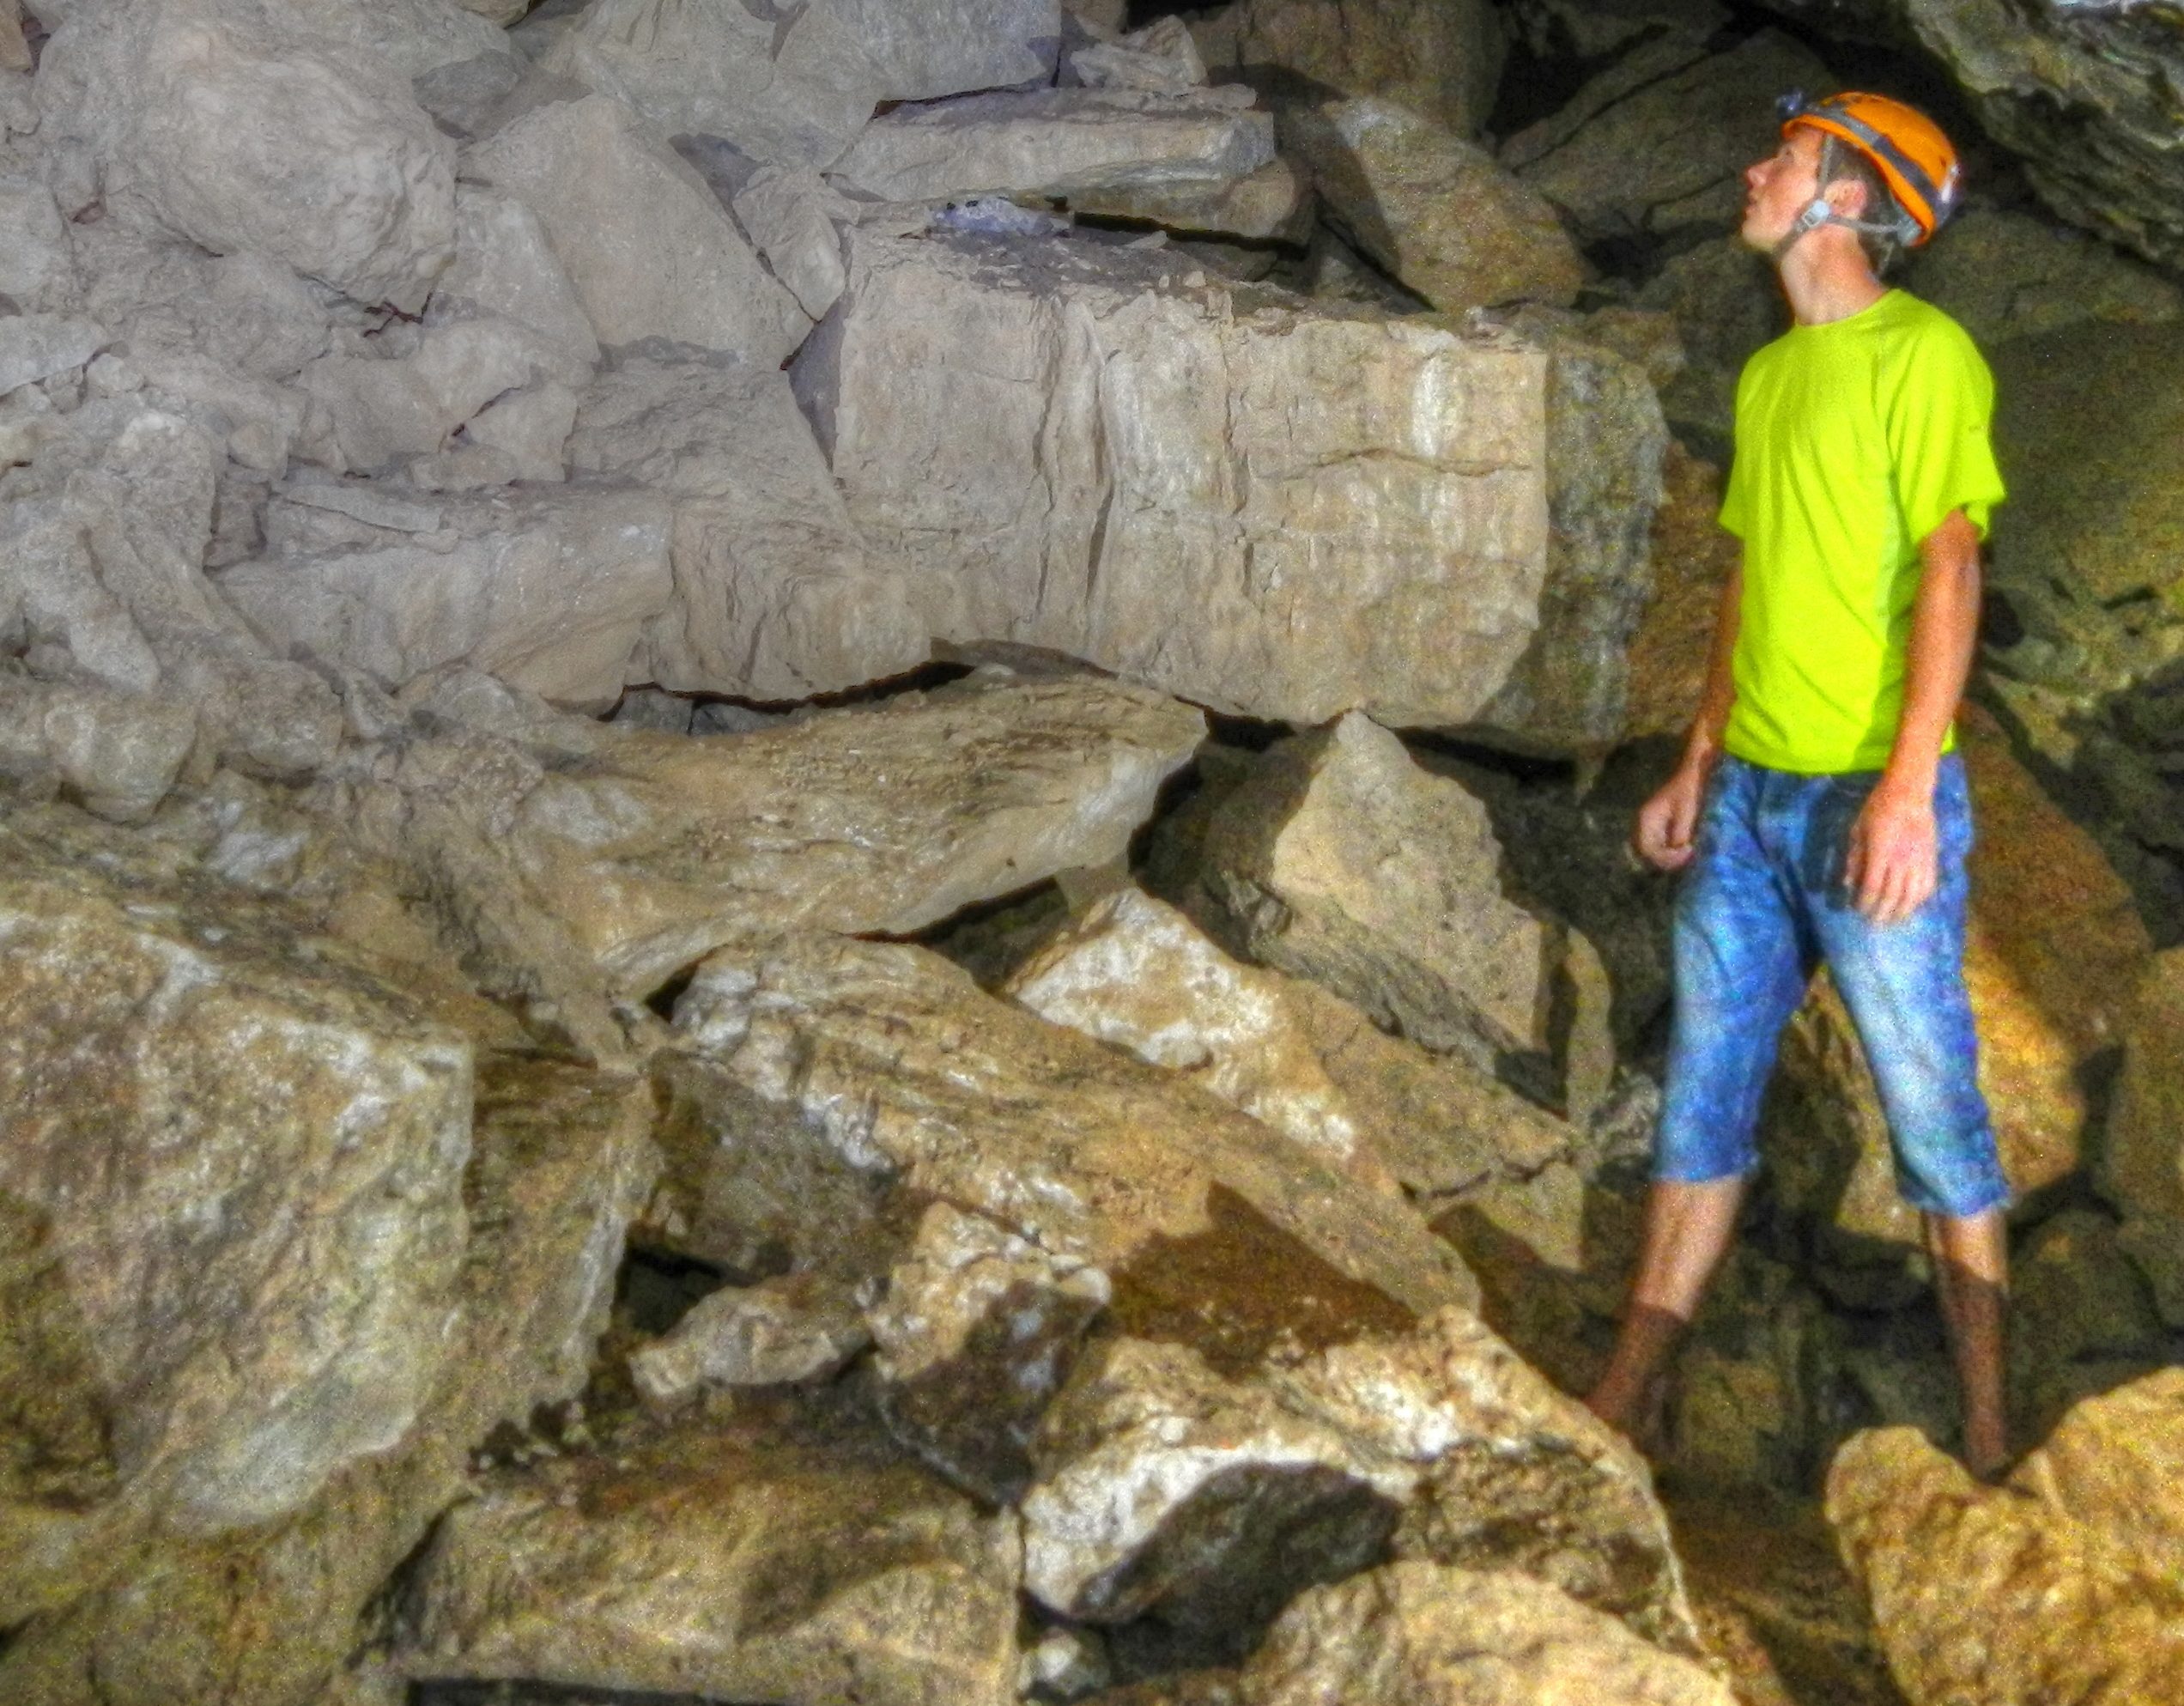 bloomington caves caving